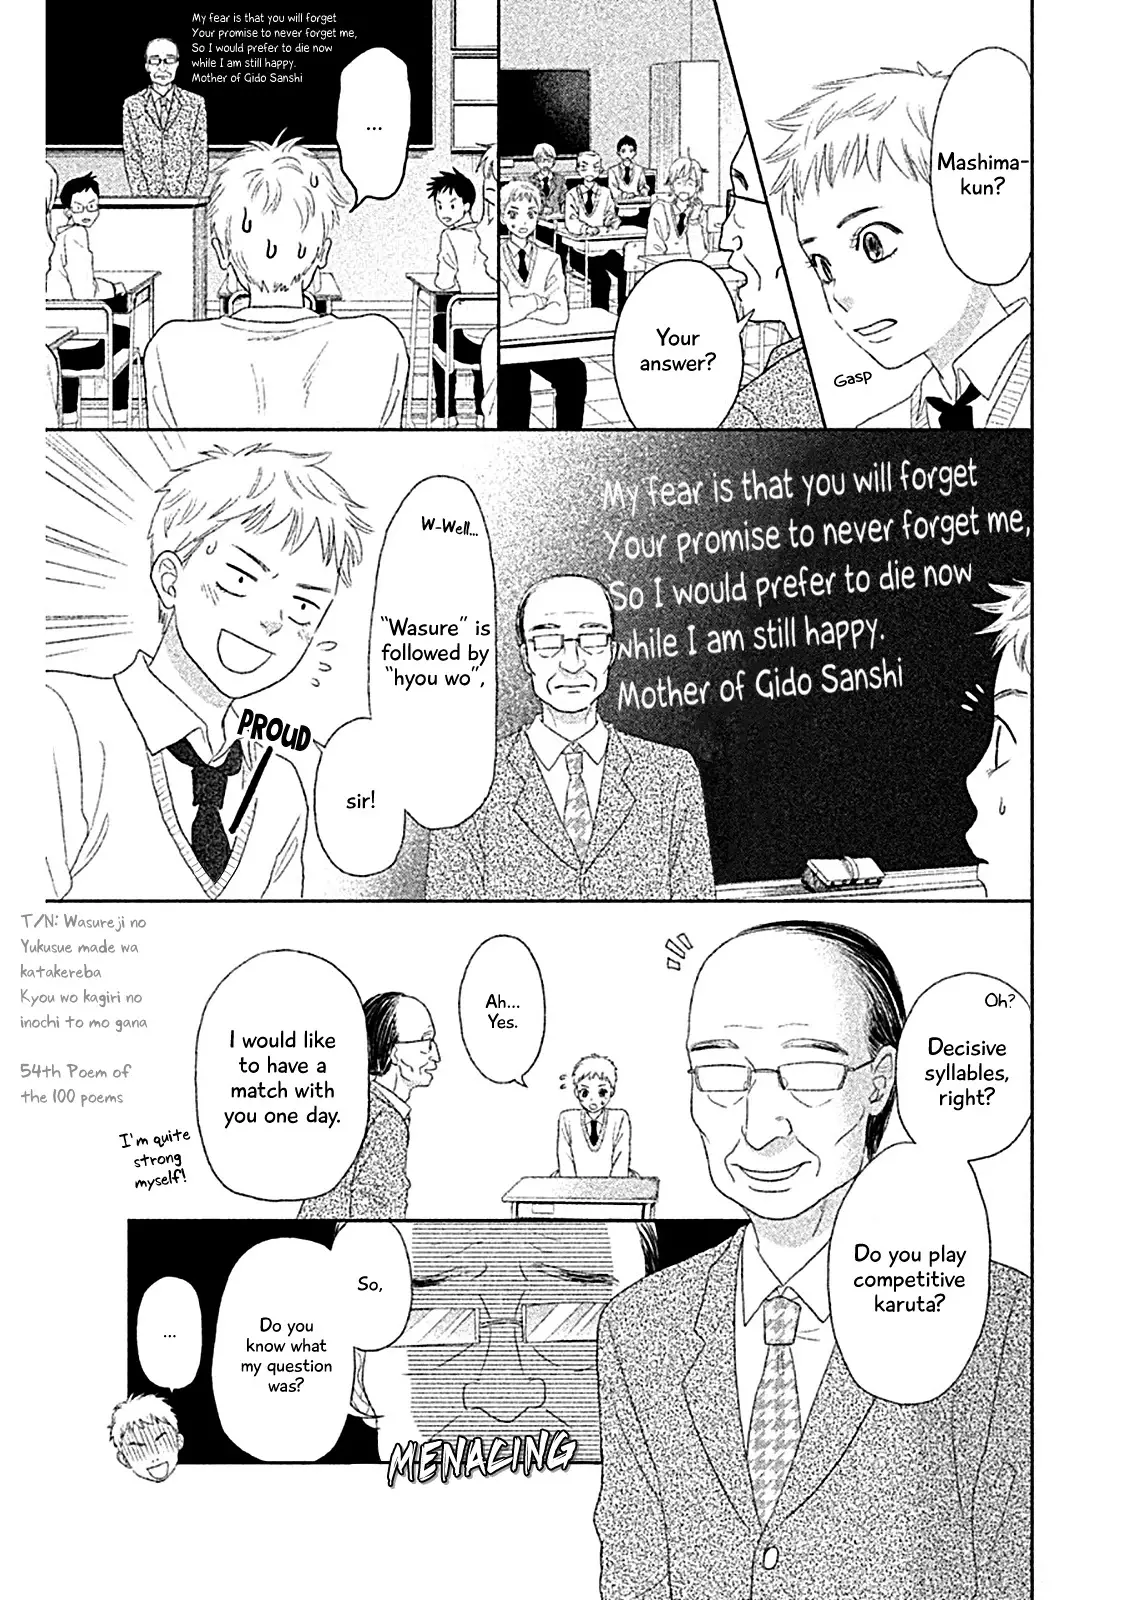 Chihayafuru: Middle School Arc - 4 page 4